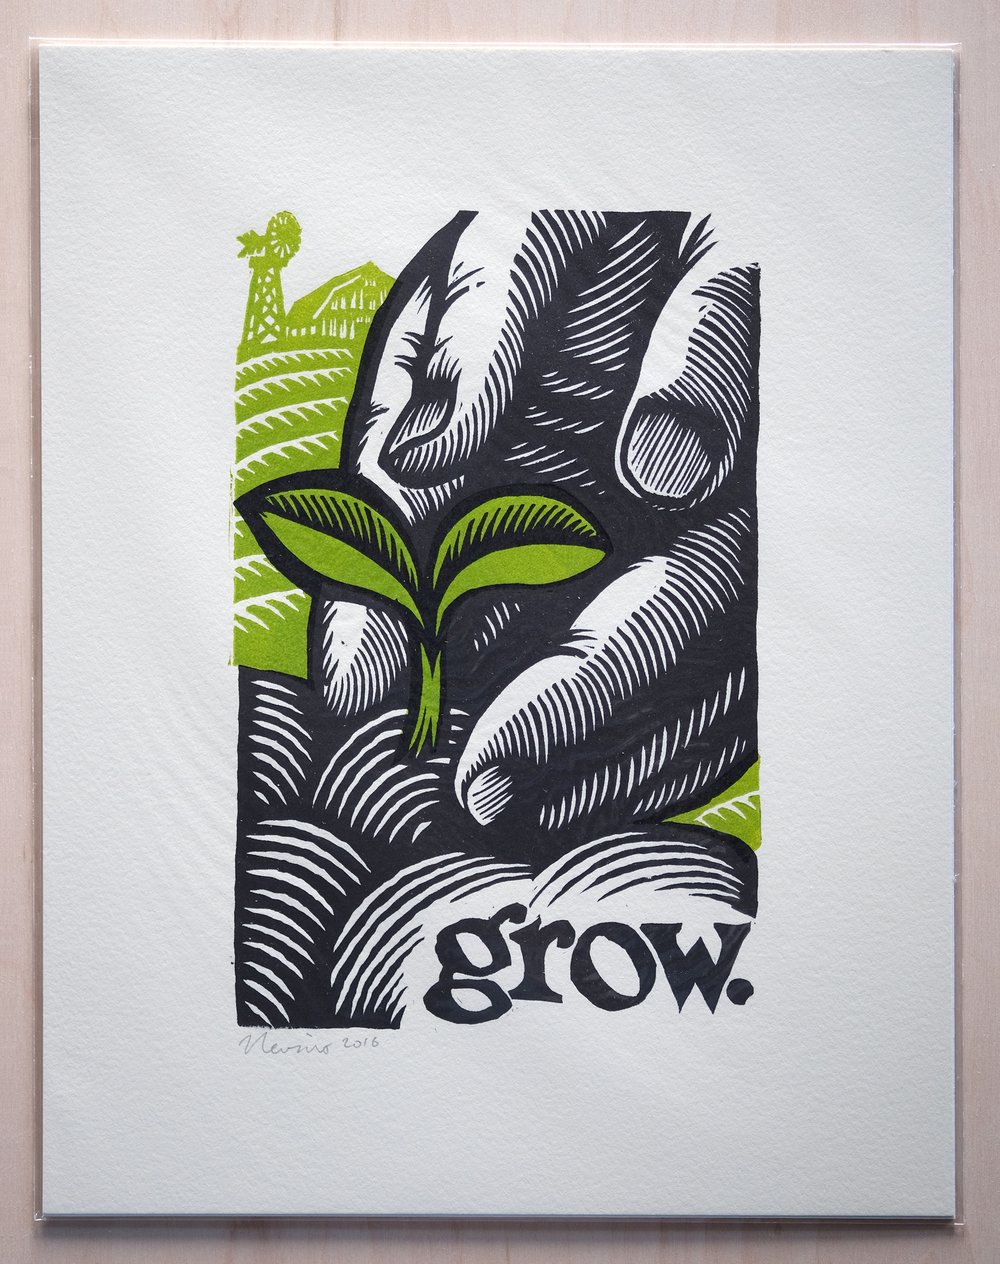 grow. 11"x14" HAND-PRINTED ORIGINAL BLOCK PRINT